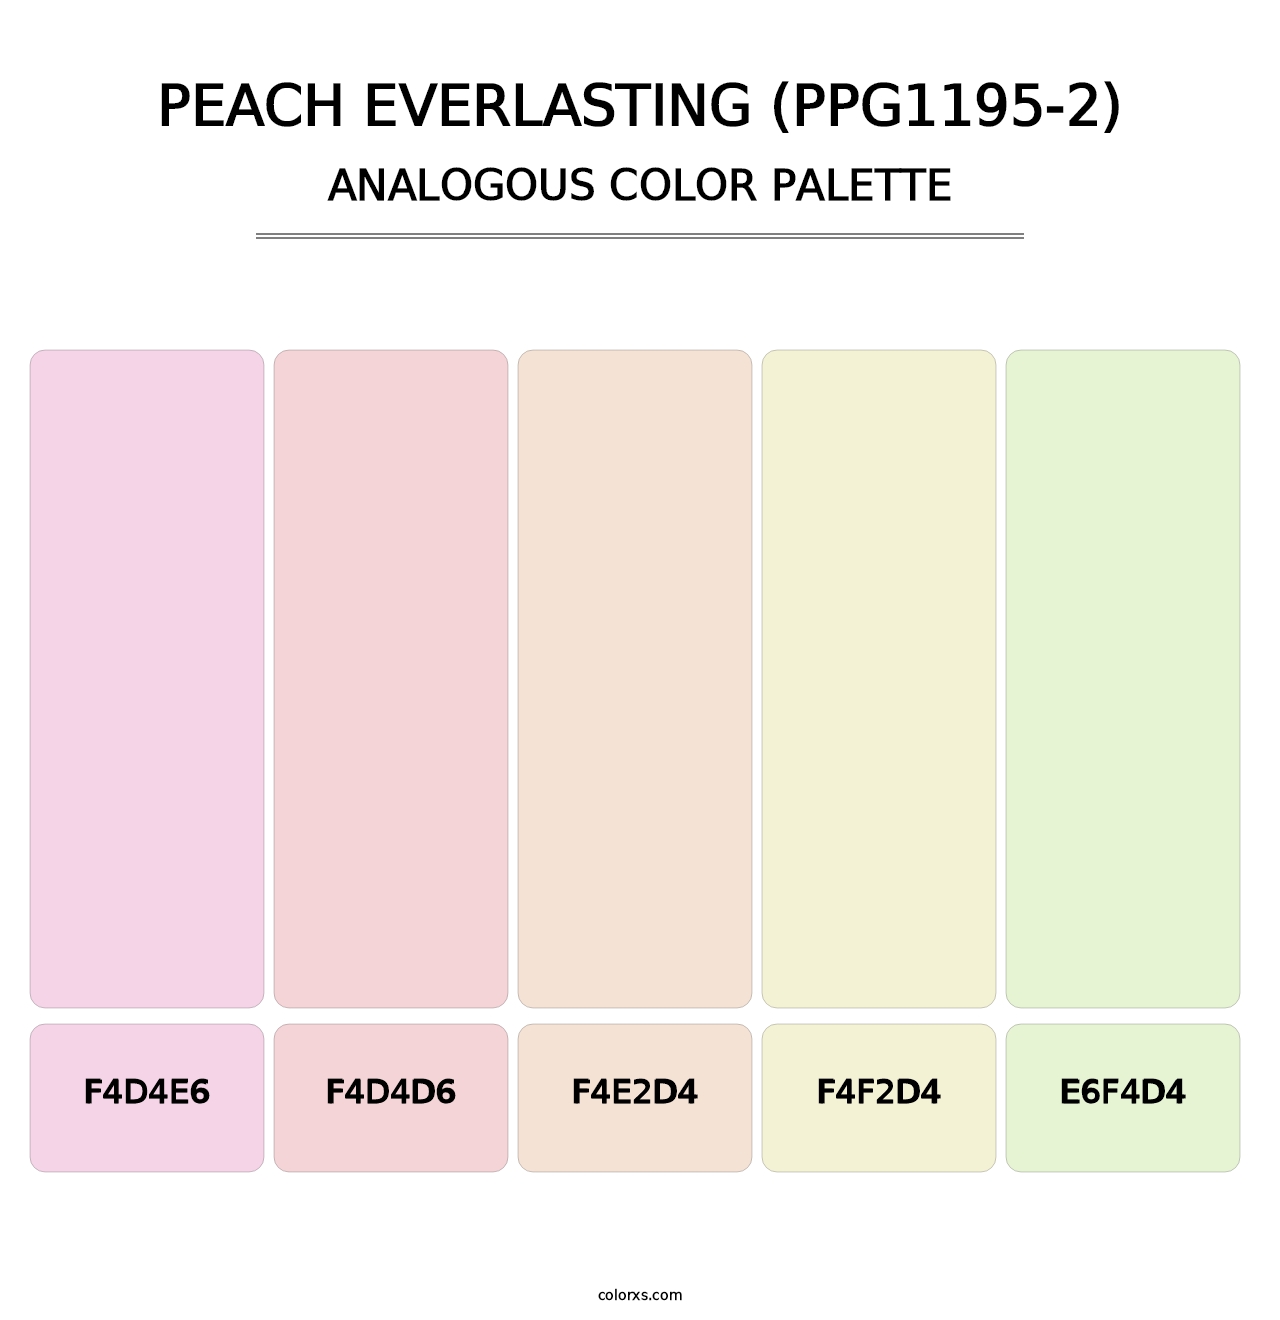 Peach Everlasting (PPG1195-2) - Analogous Color Palette